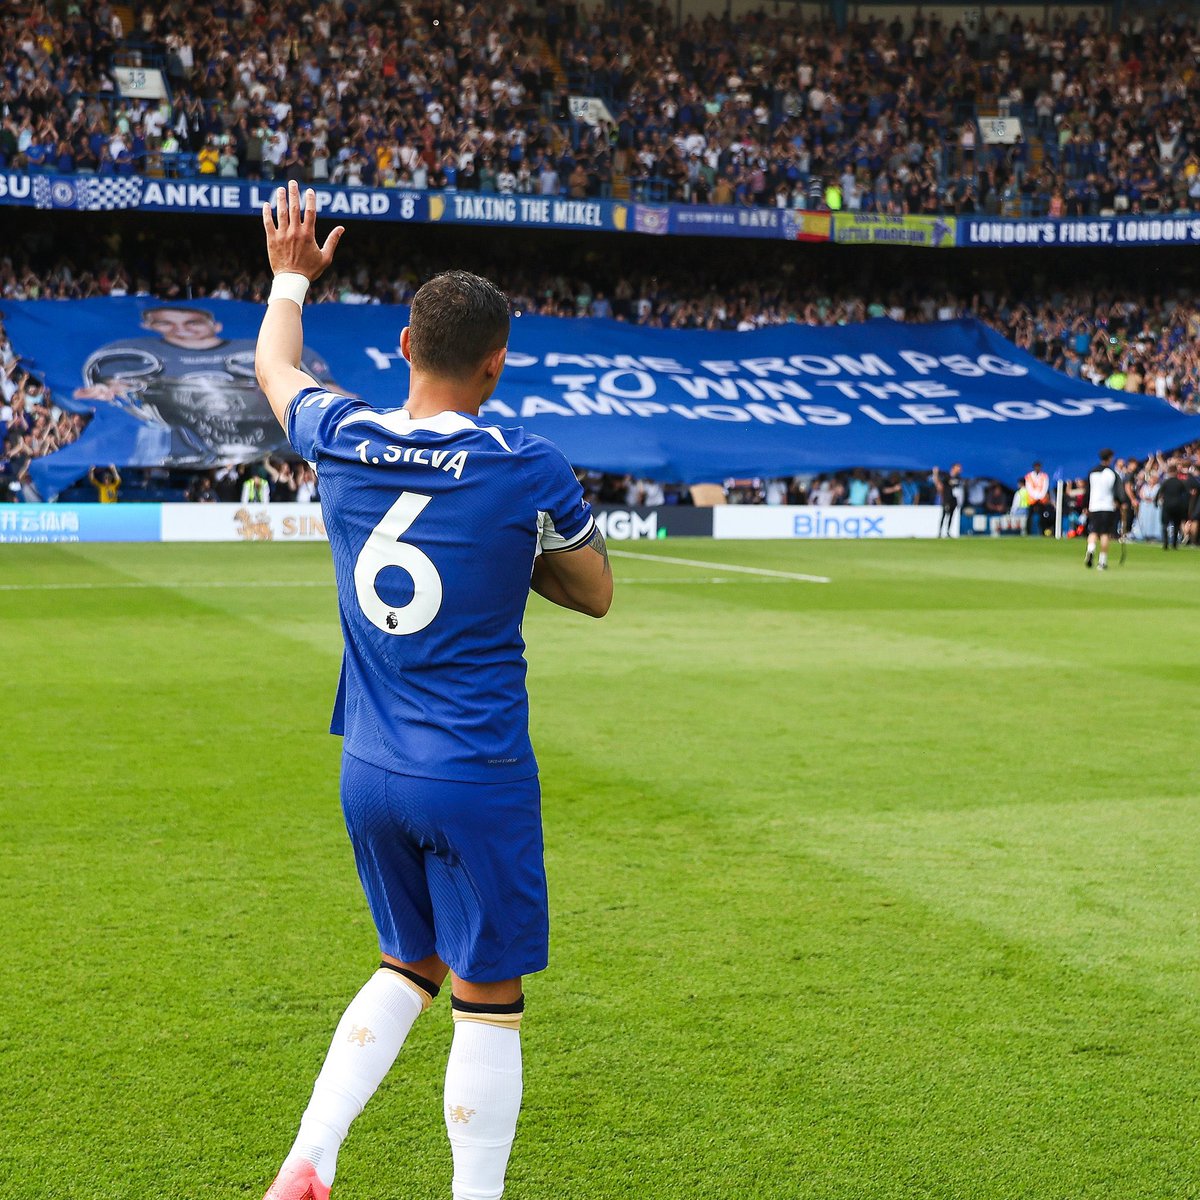 Thiago Silva Chelsea legend 💙
Follow @SabasAsenga